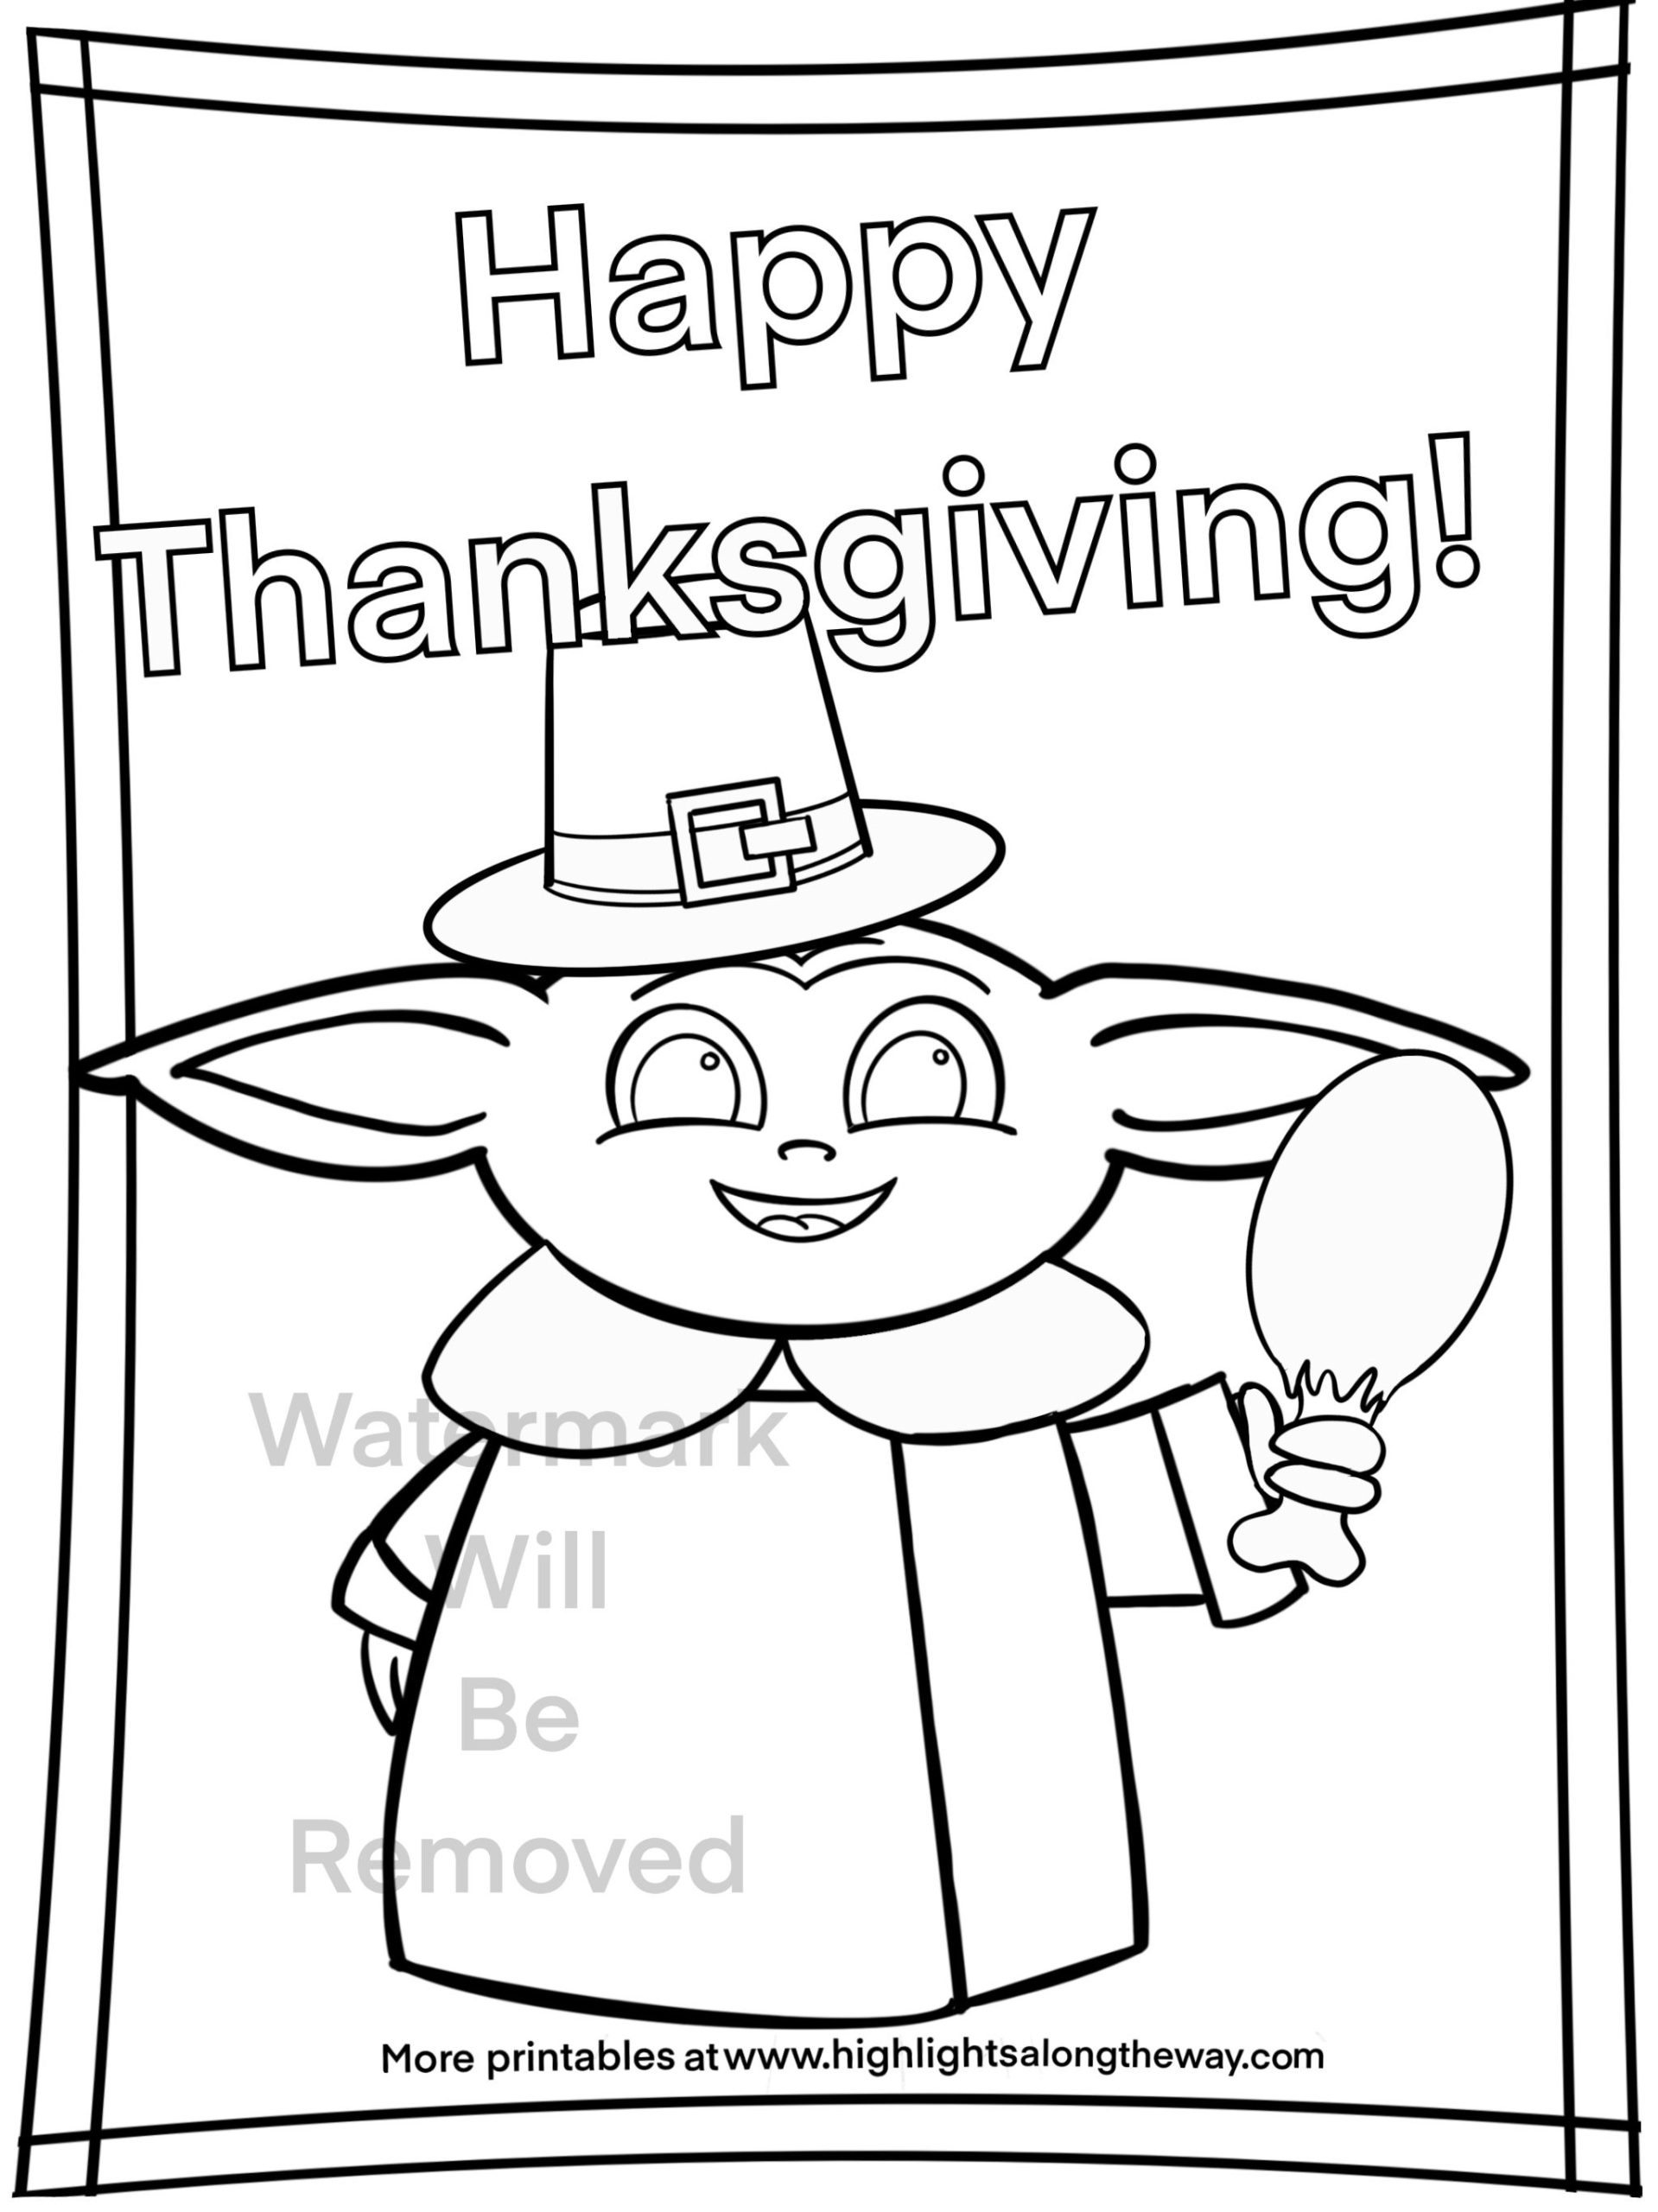 Baby yoda thanksgiving printable coloring activity sheet